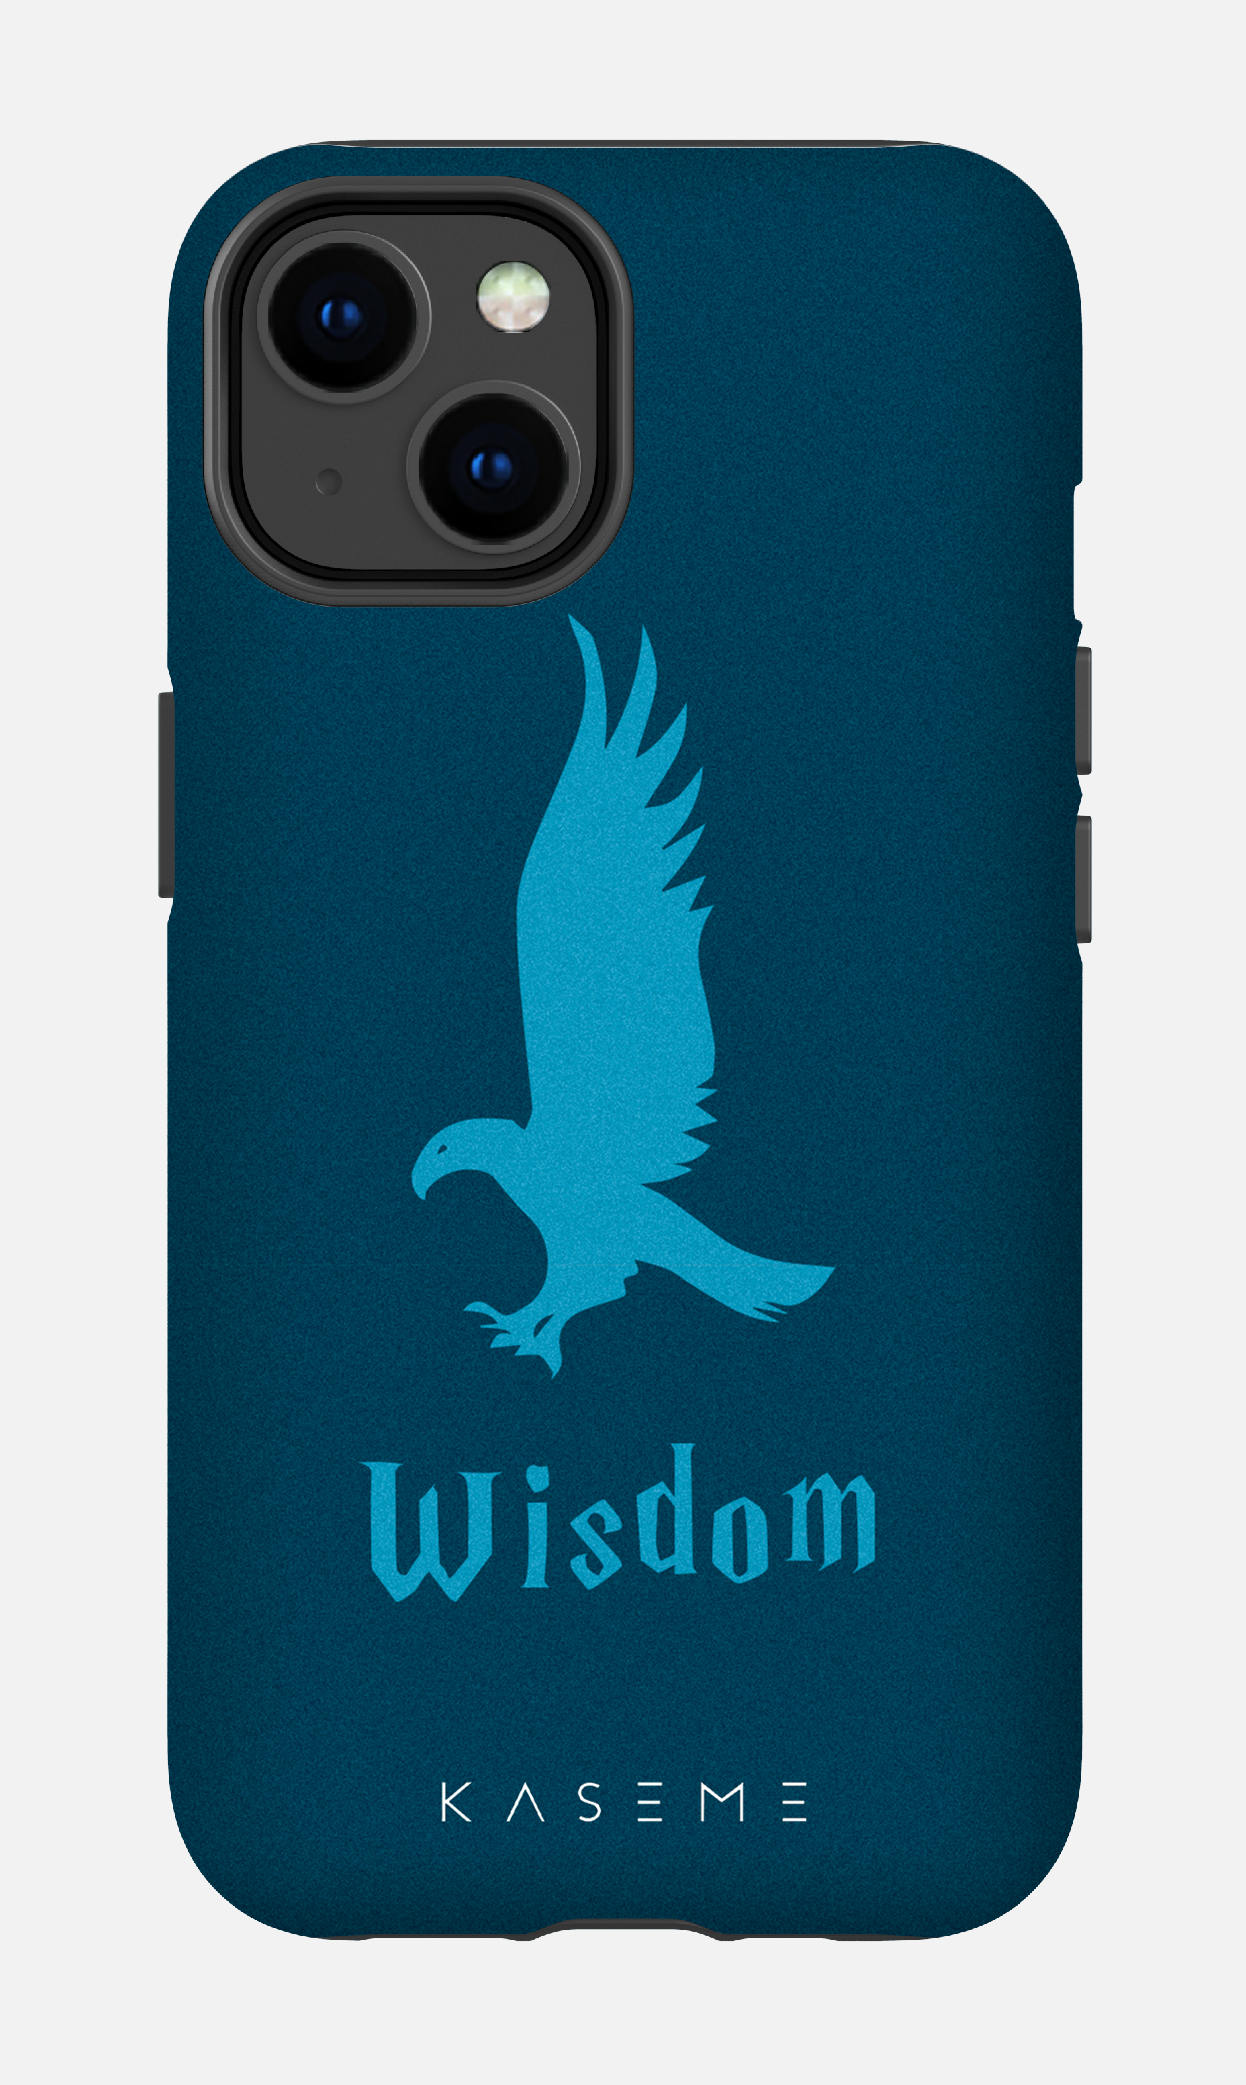 Wisdom - iPhone 14